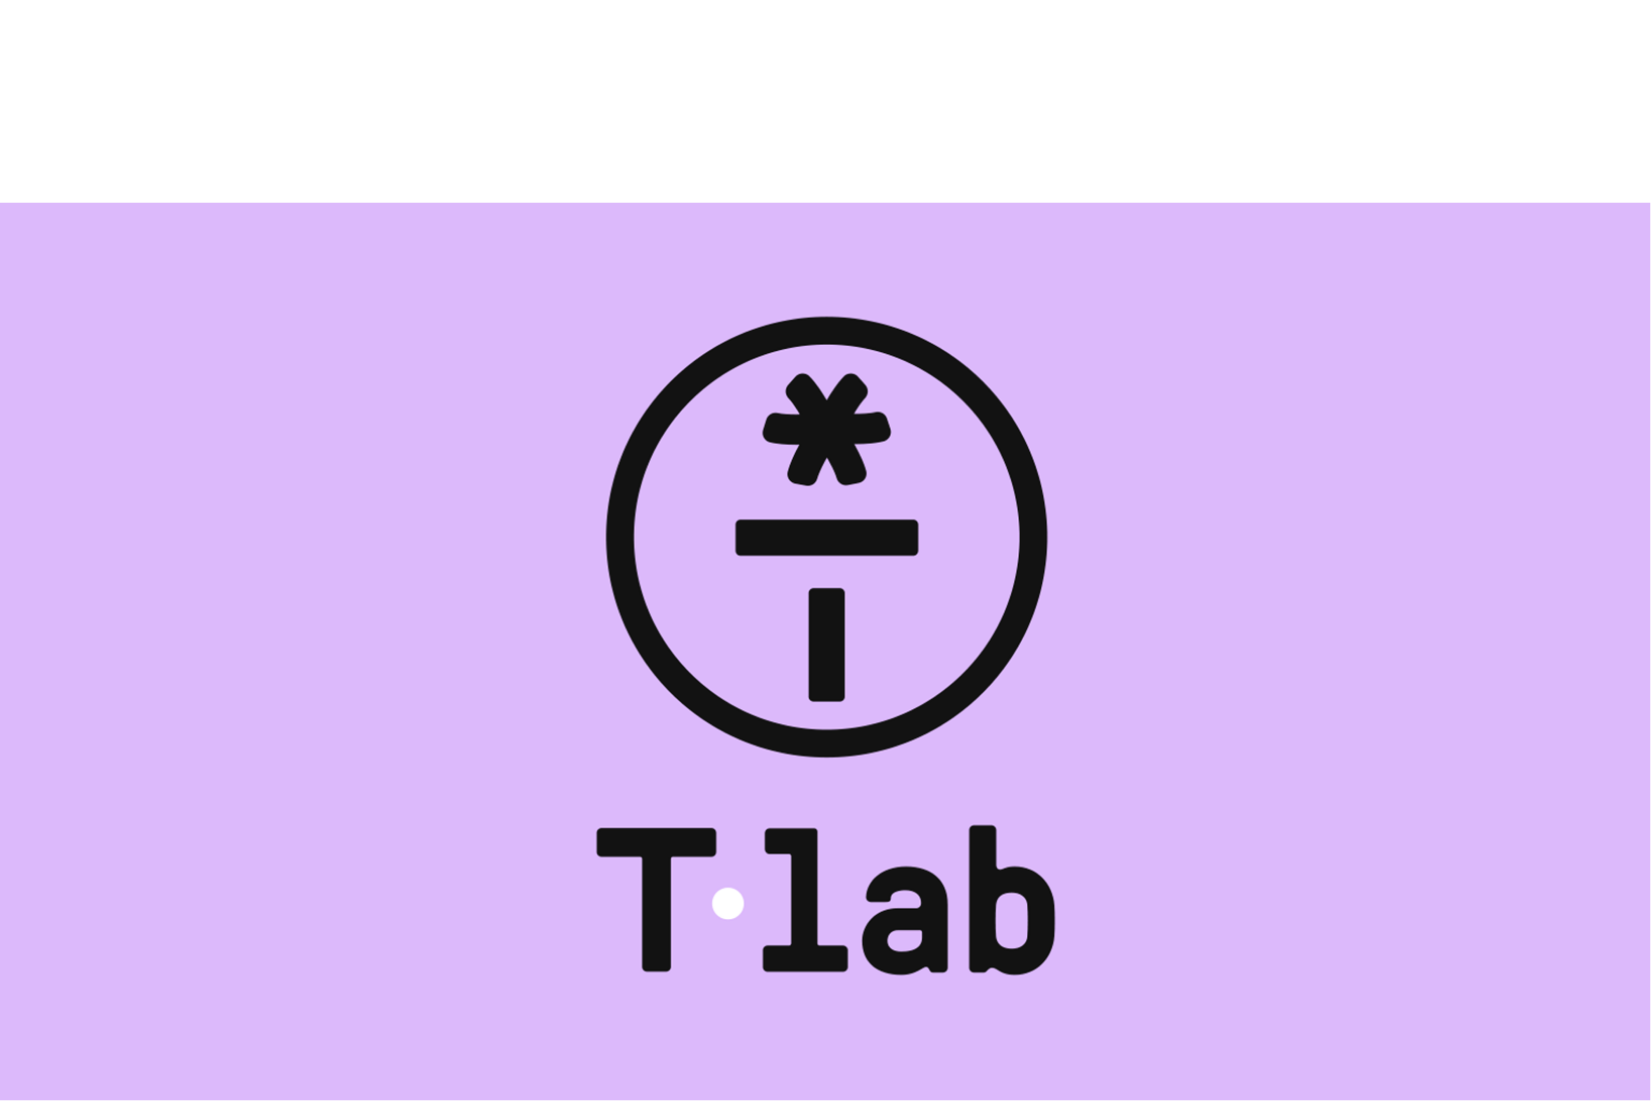 Black T.Lab logo on purple background.